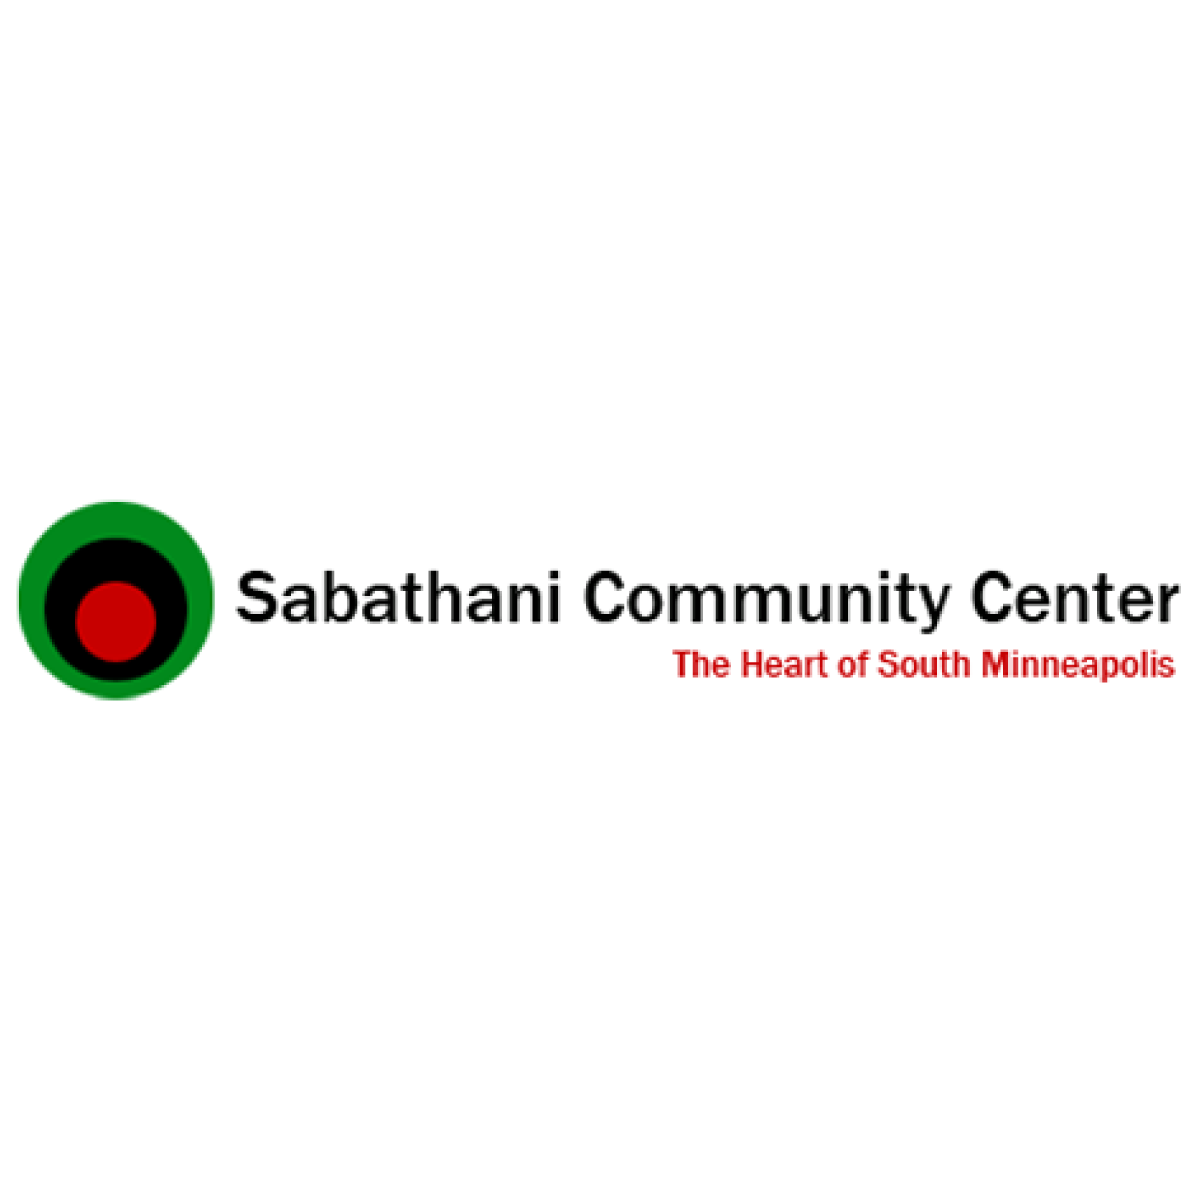 Centro comunitario Sabathani
sabathani.org